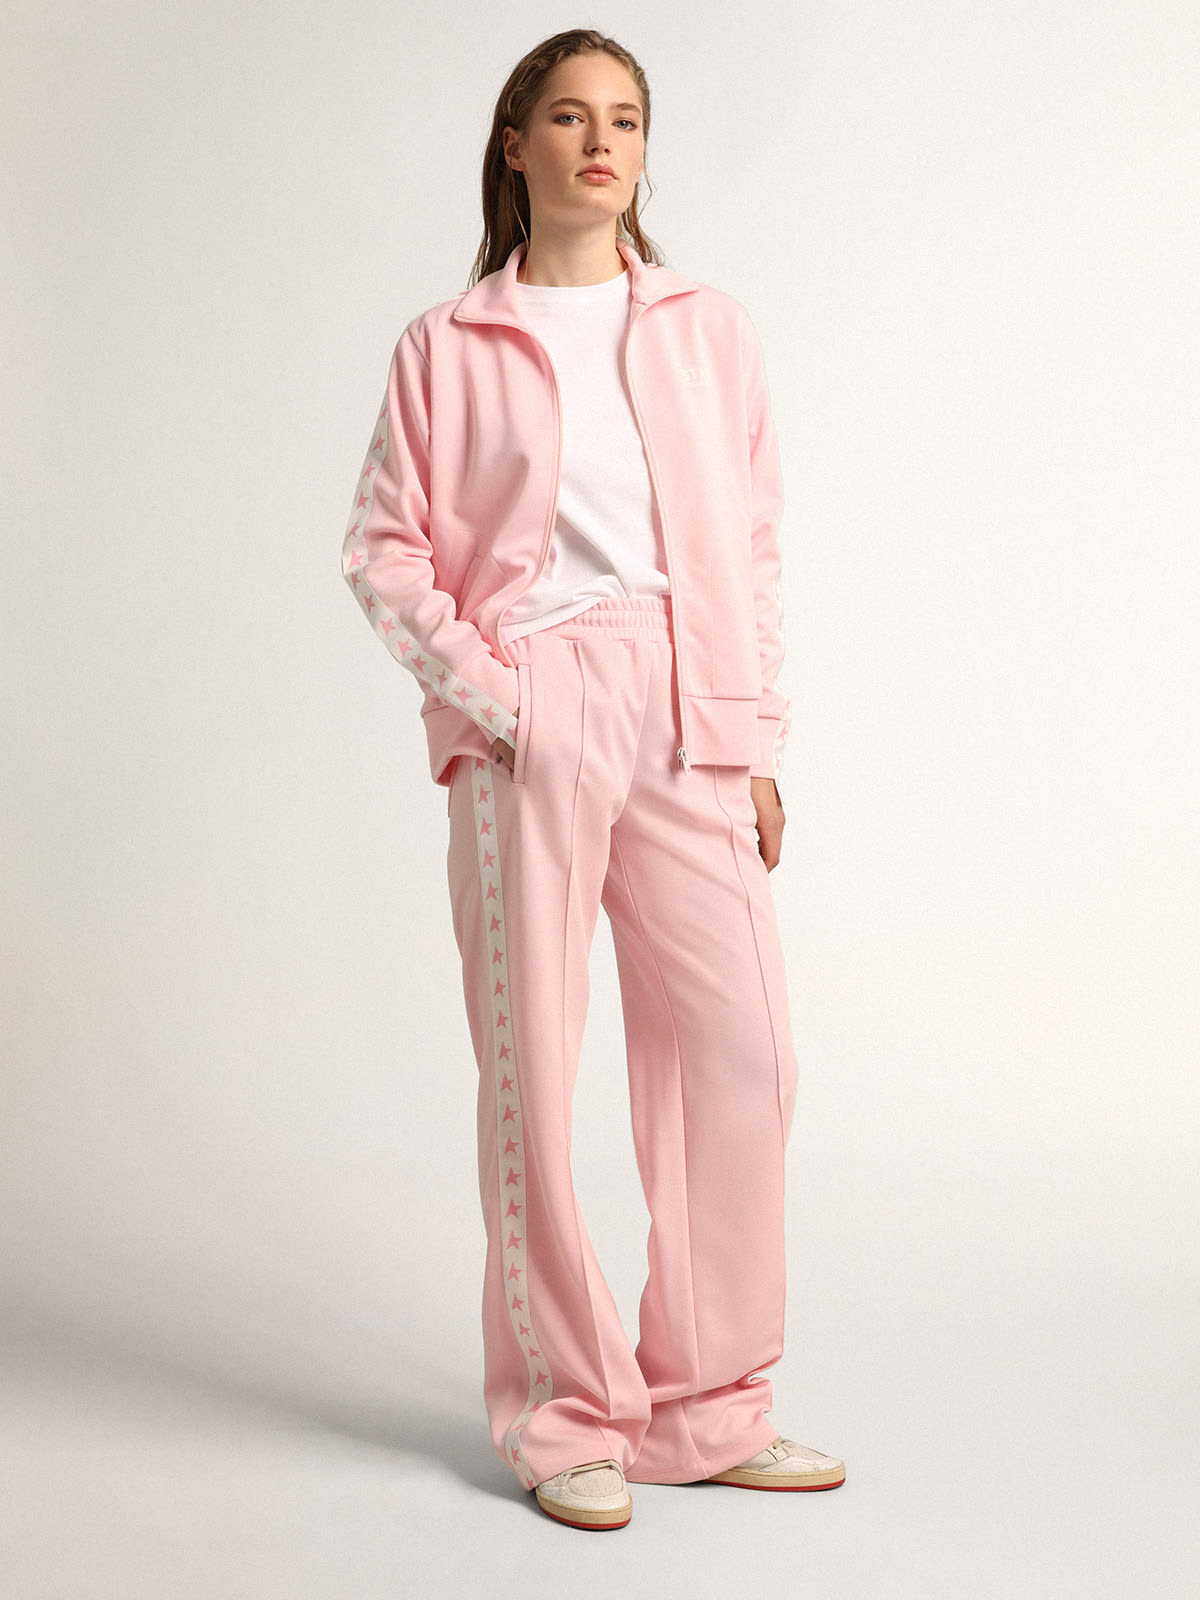 Golden Goose - Women’s pink zipped sweatshirt with contrasting pink stars in 